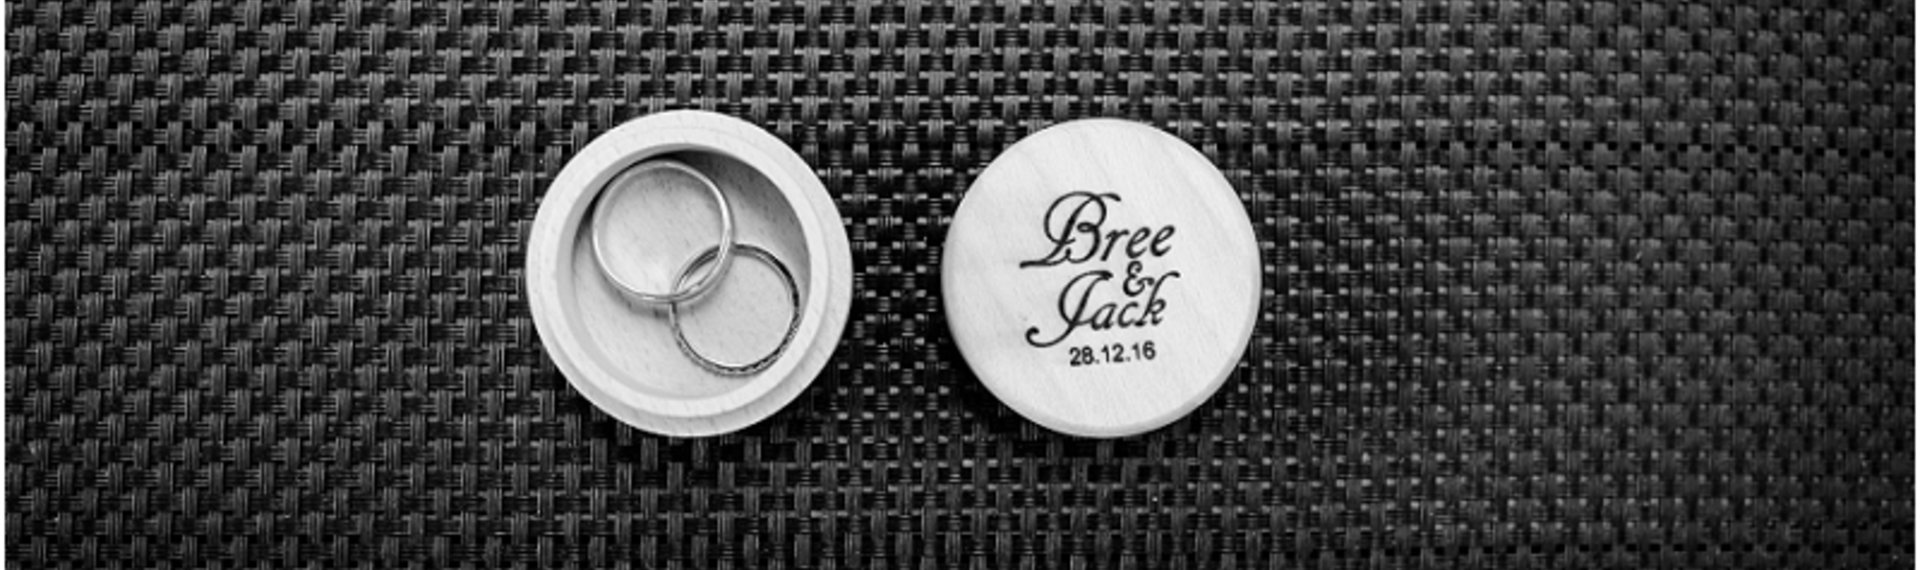 Bree & Jack | Perth Wedding Photography